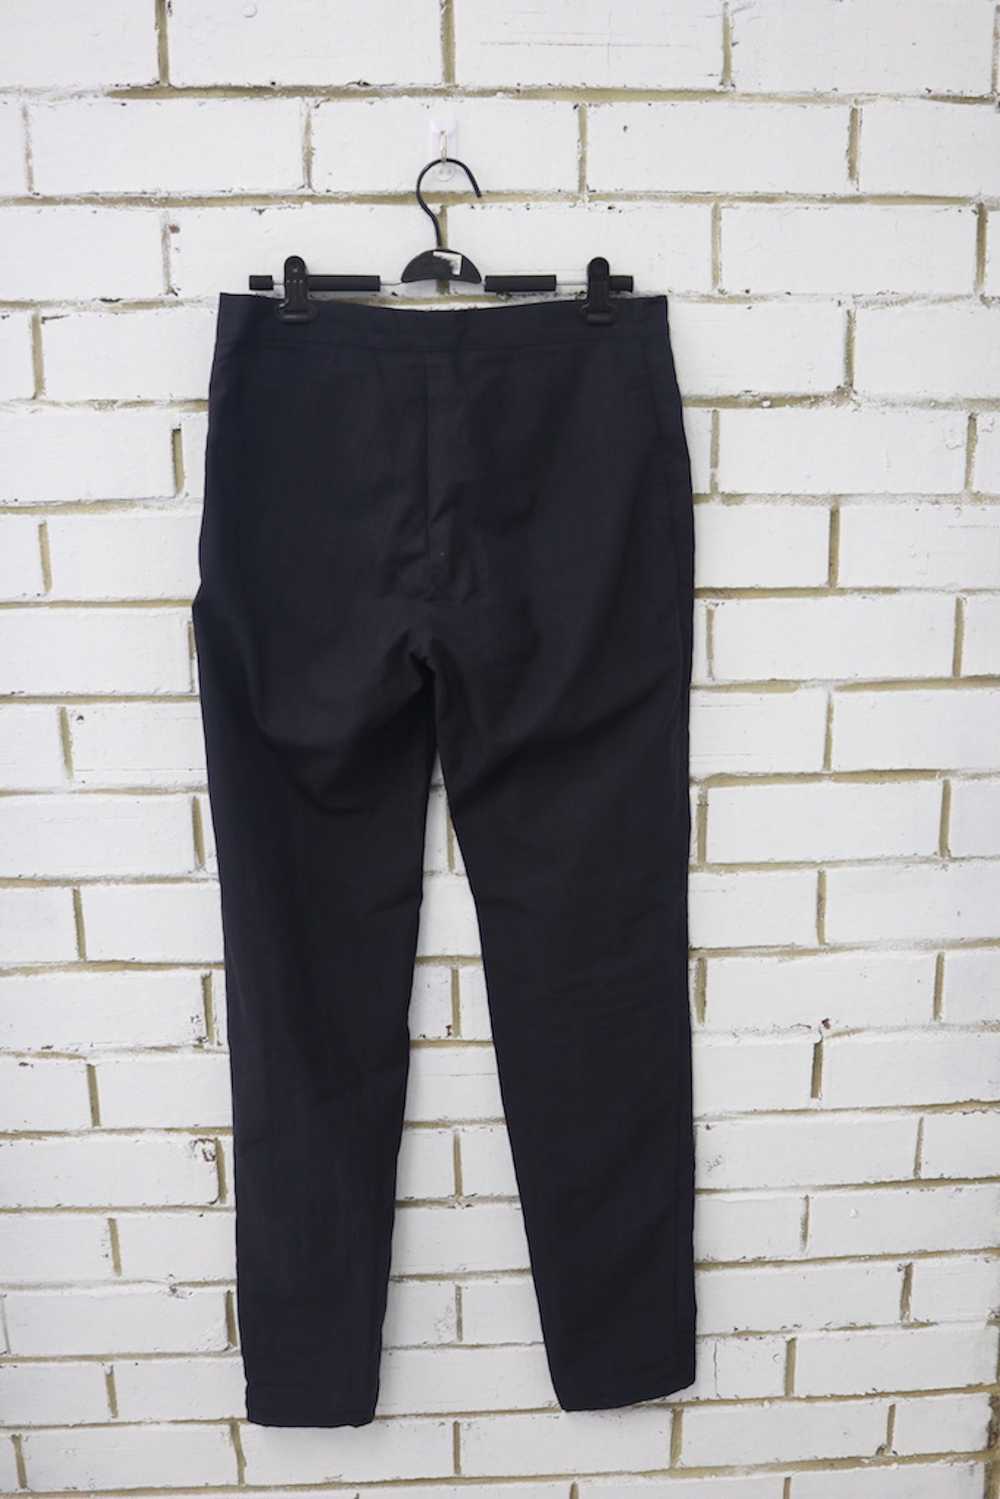 Lee Roach SS15 Navy Pants nylon/cotton - image 2